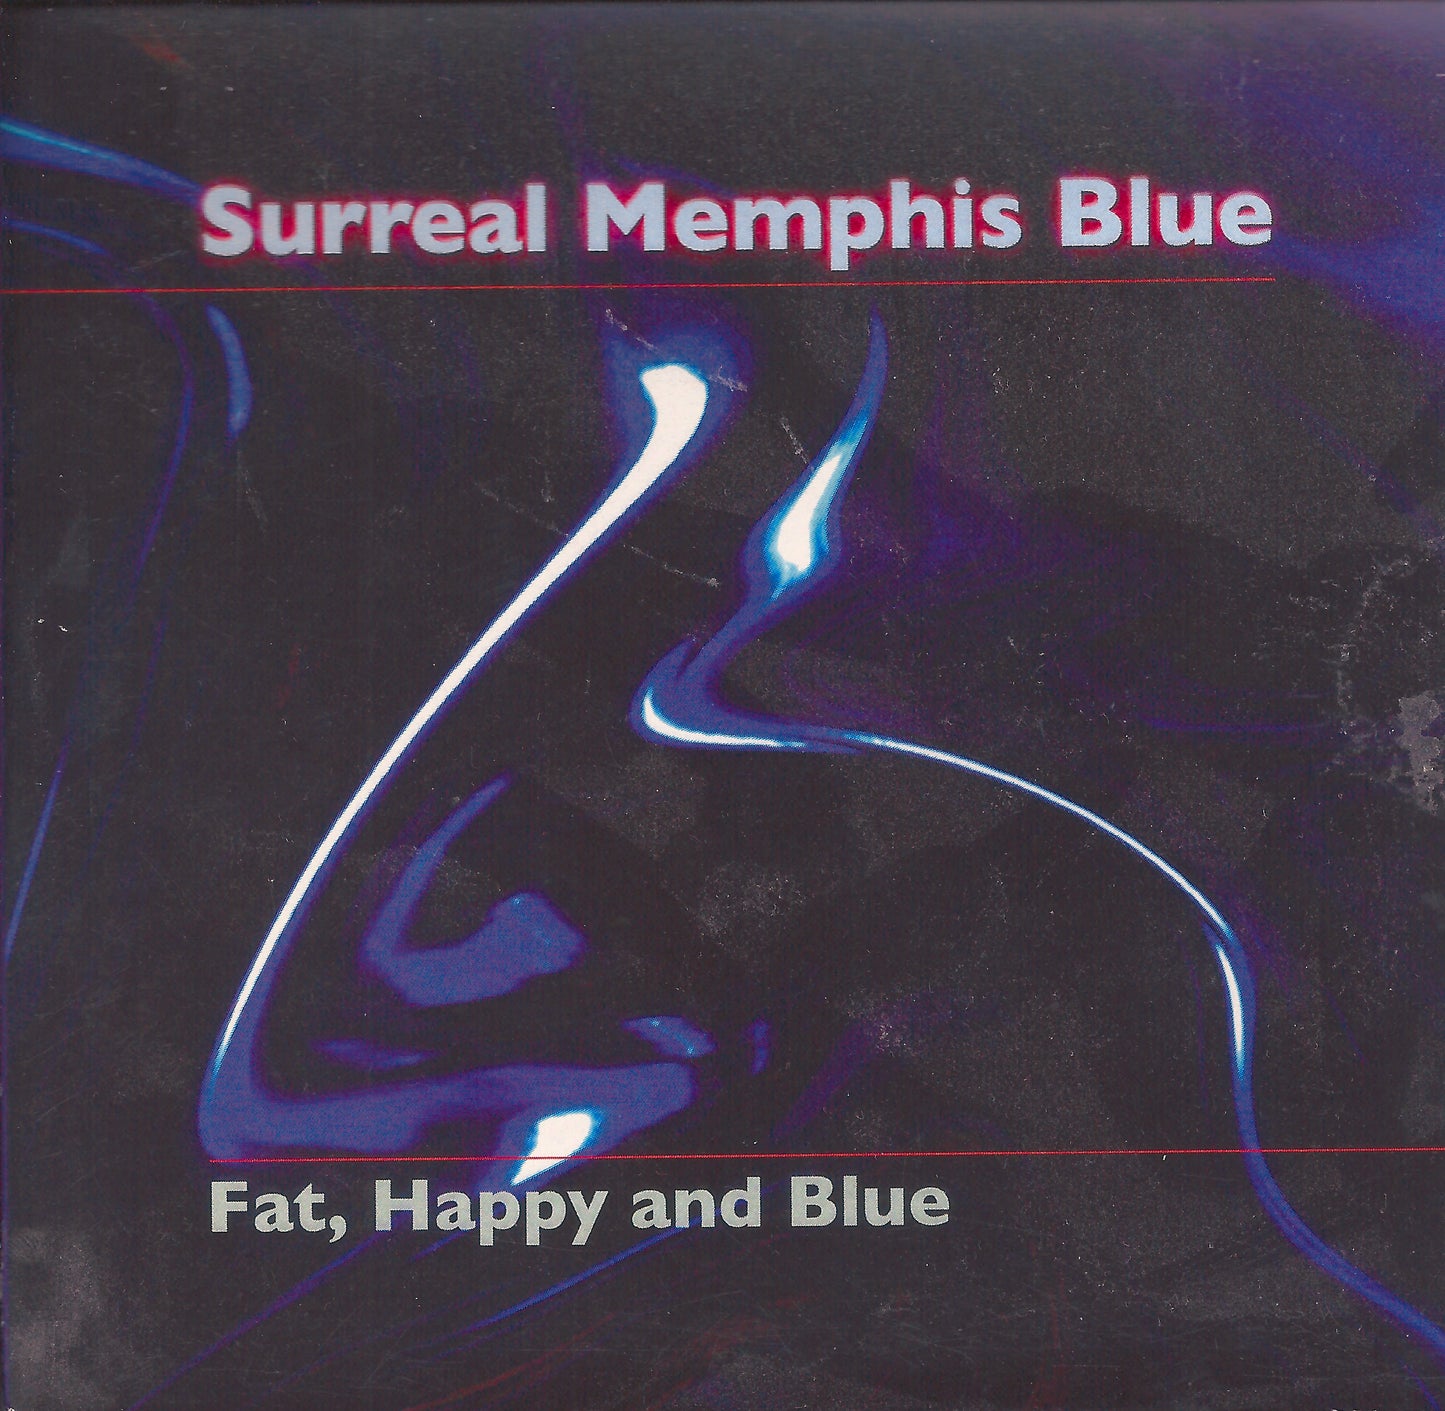 Fat, Happy and Blue - Surreal Memphis Blue Album